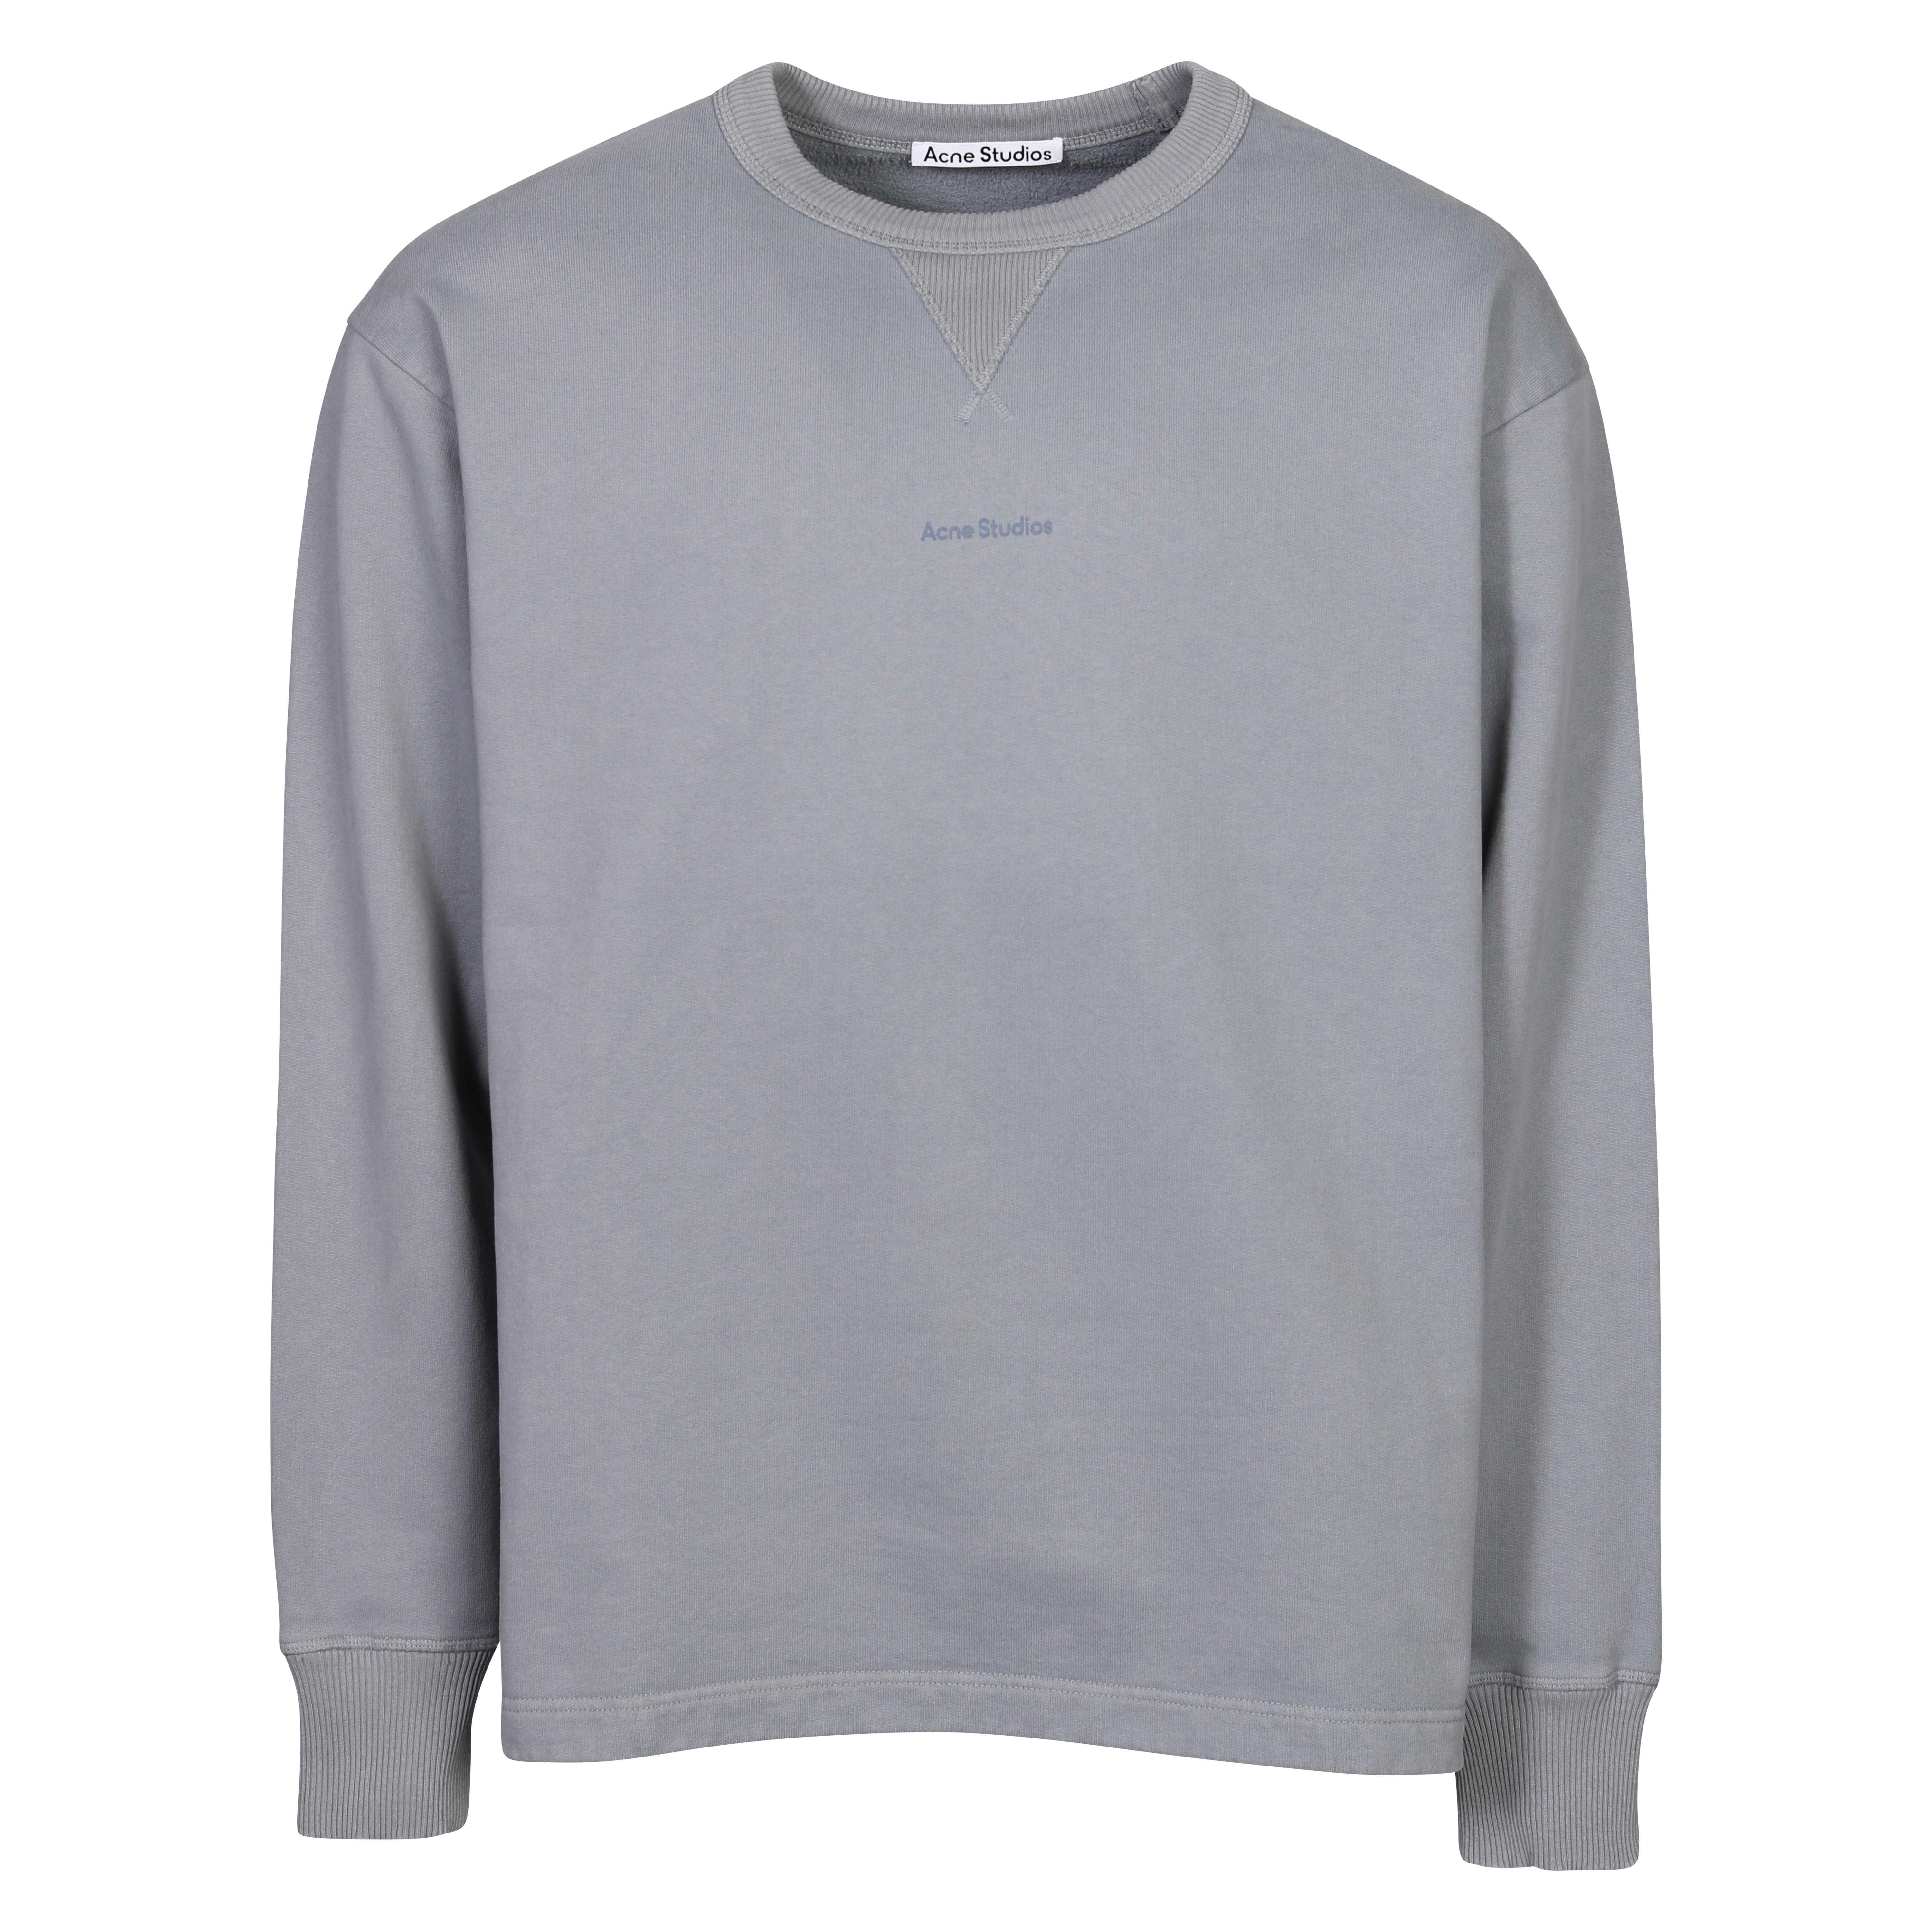 Acne Studios Stamp Sweatshirt in Steel Grey XL